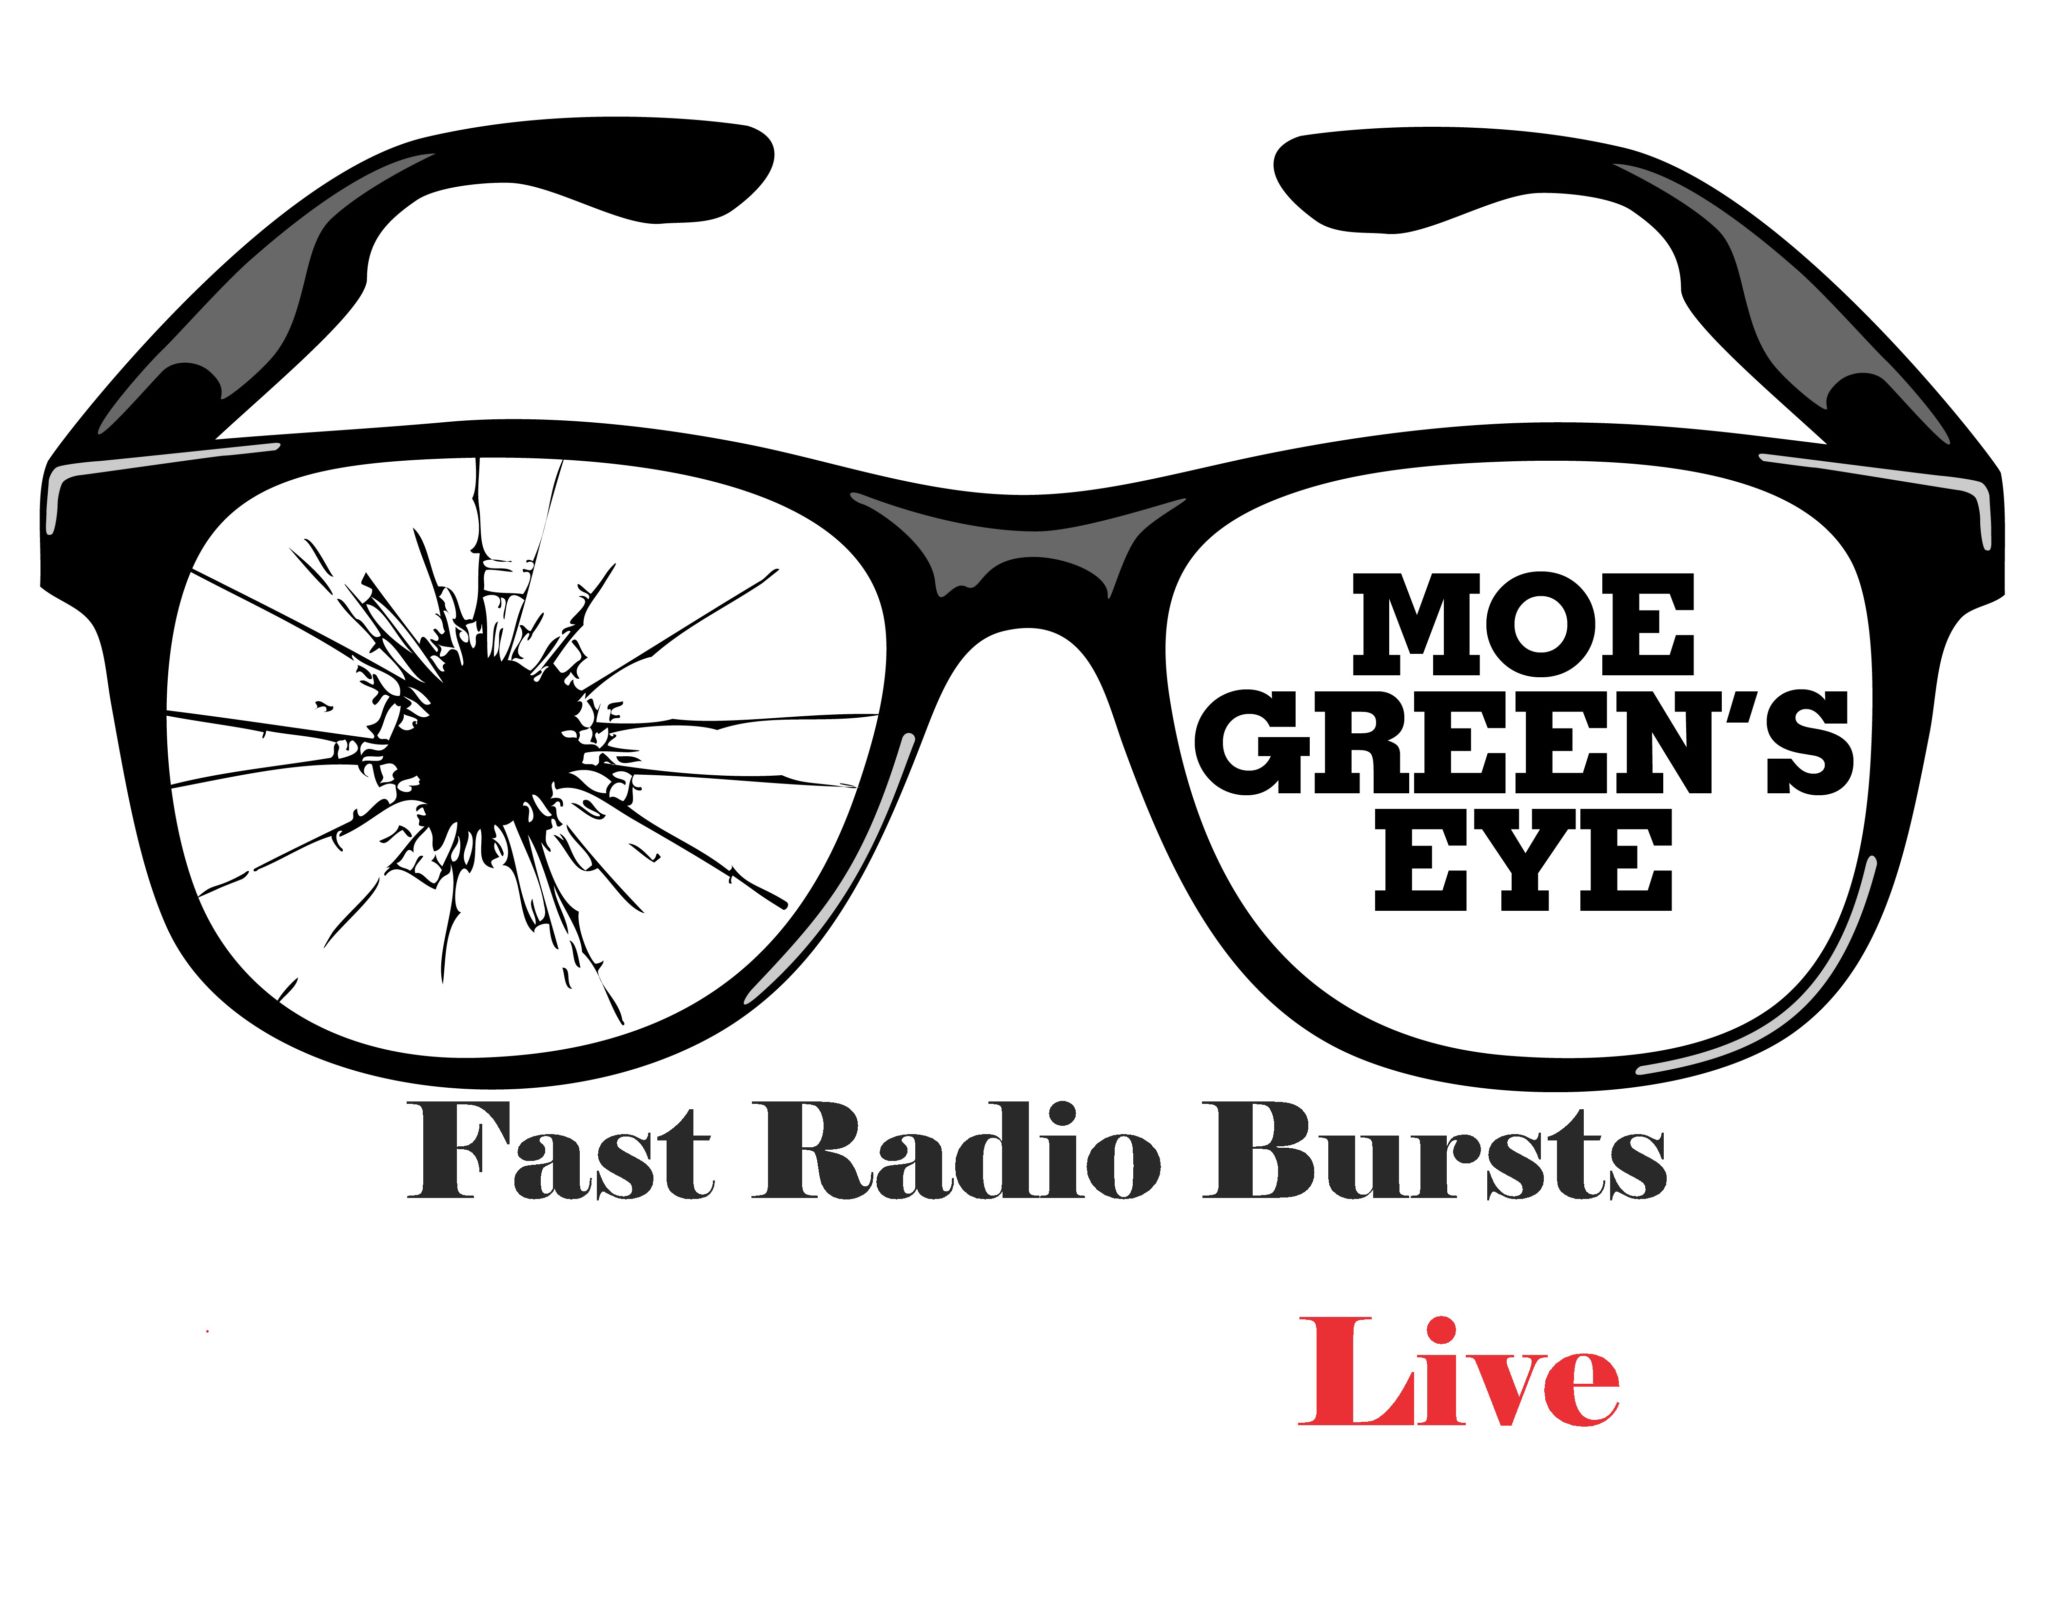 Moe Greens Eye